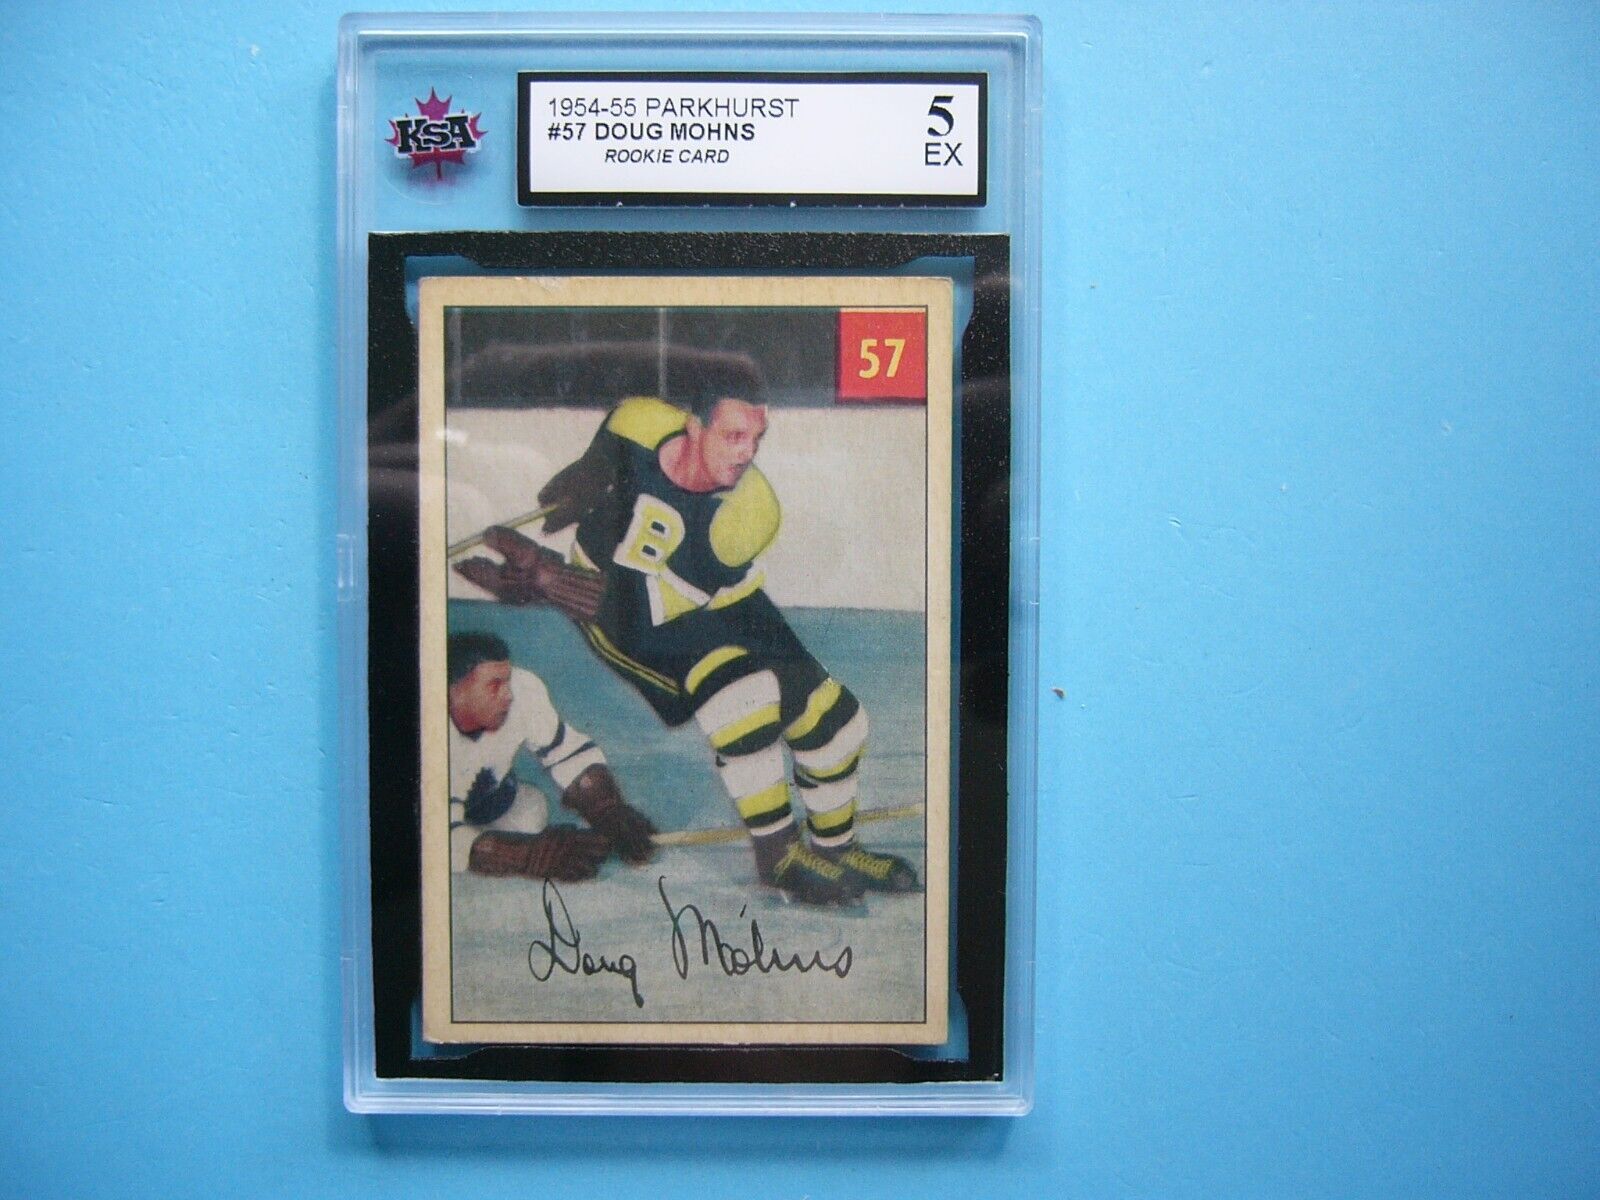 1954/55 PARKHURST NHL HOCKEY CARD #57 DOUG MOHNS ROOKIE RC KSA 5 EX SHARP PARKIE. rookie card picture